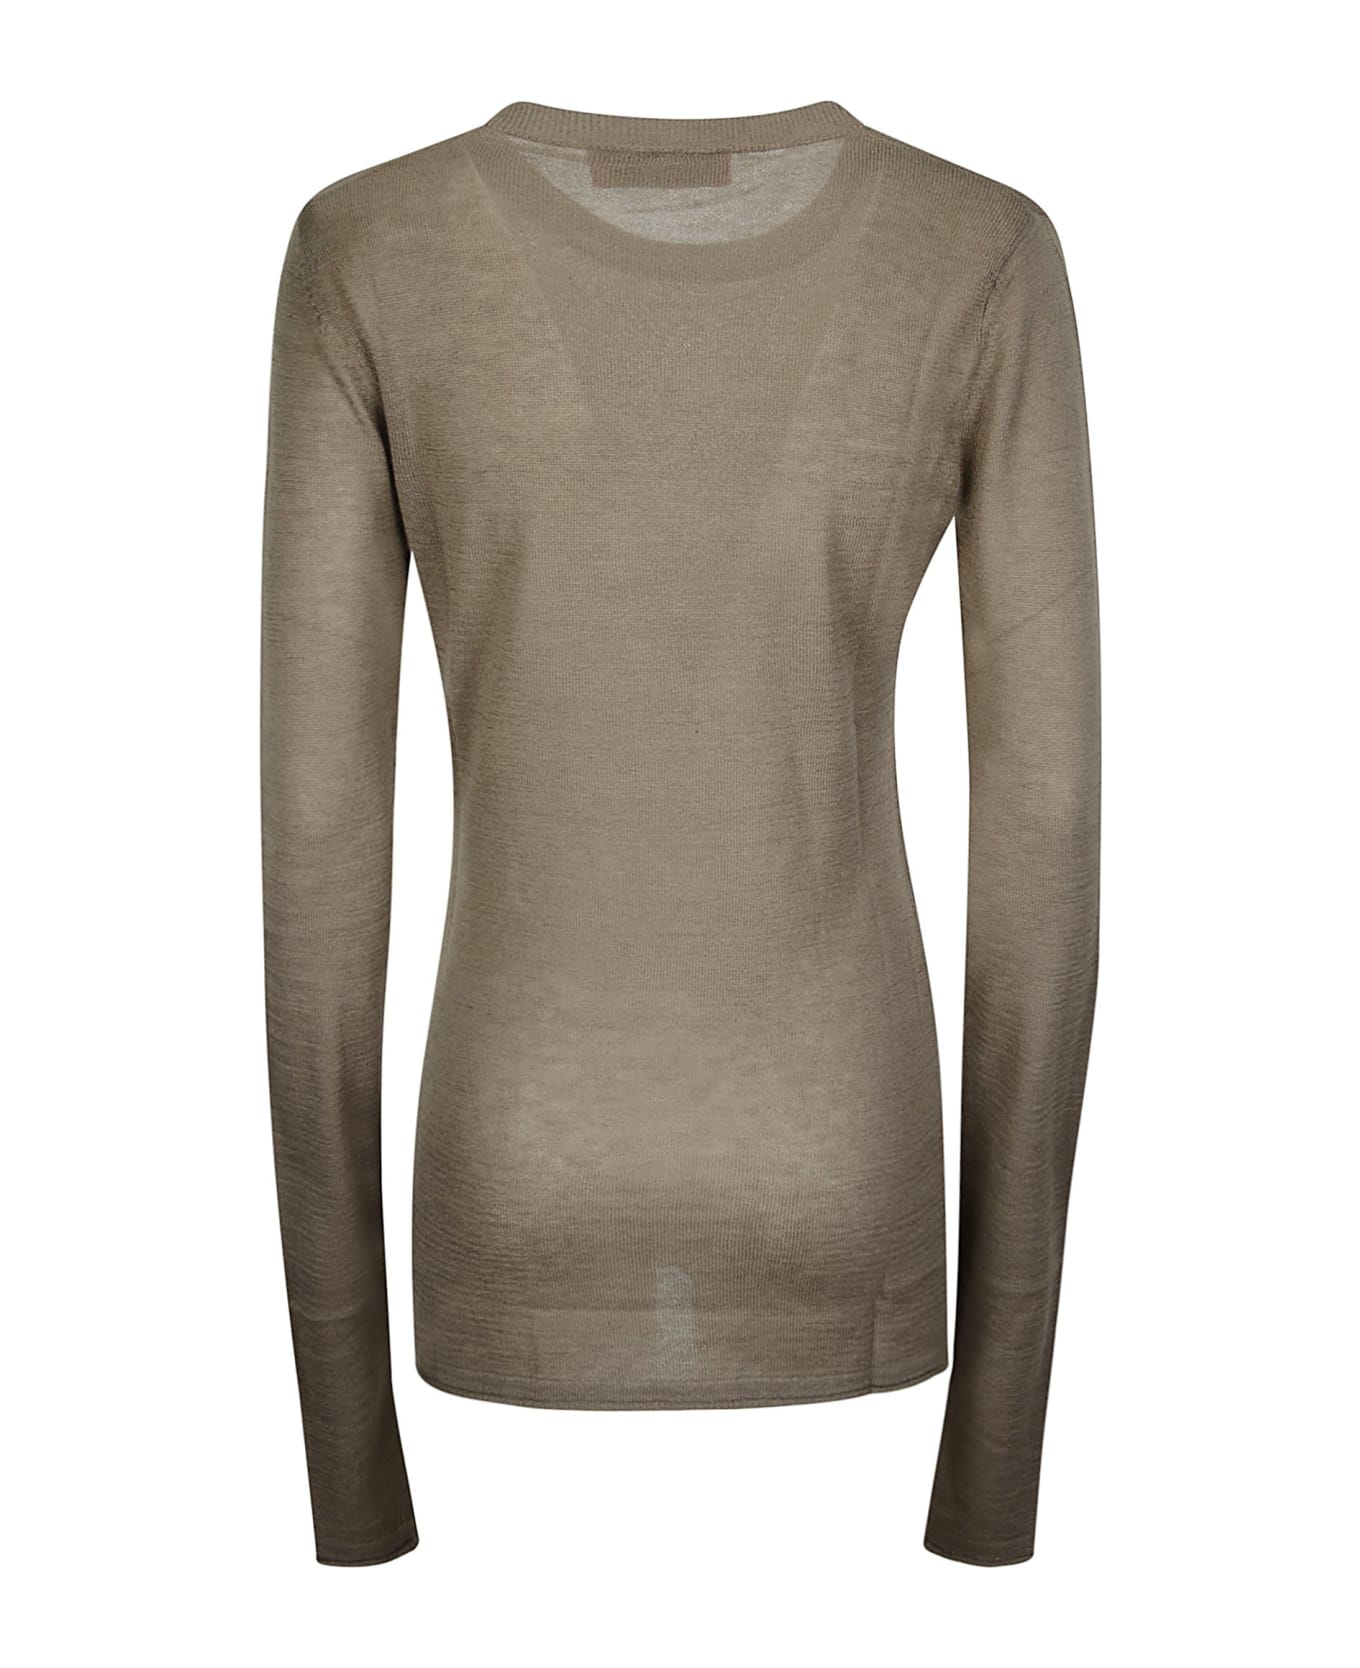 Wild Cashmere Extra Long Sleeve G/neck Sweater - 190